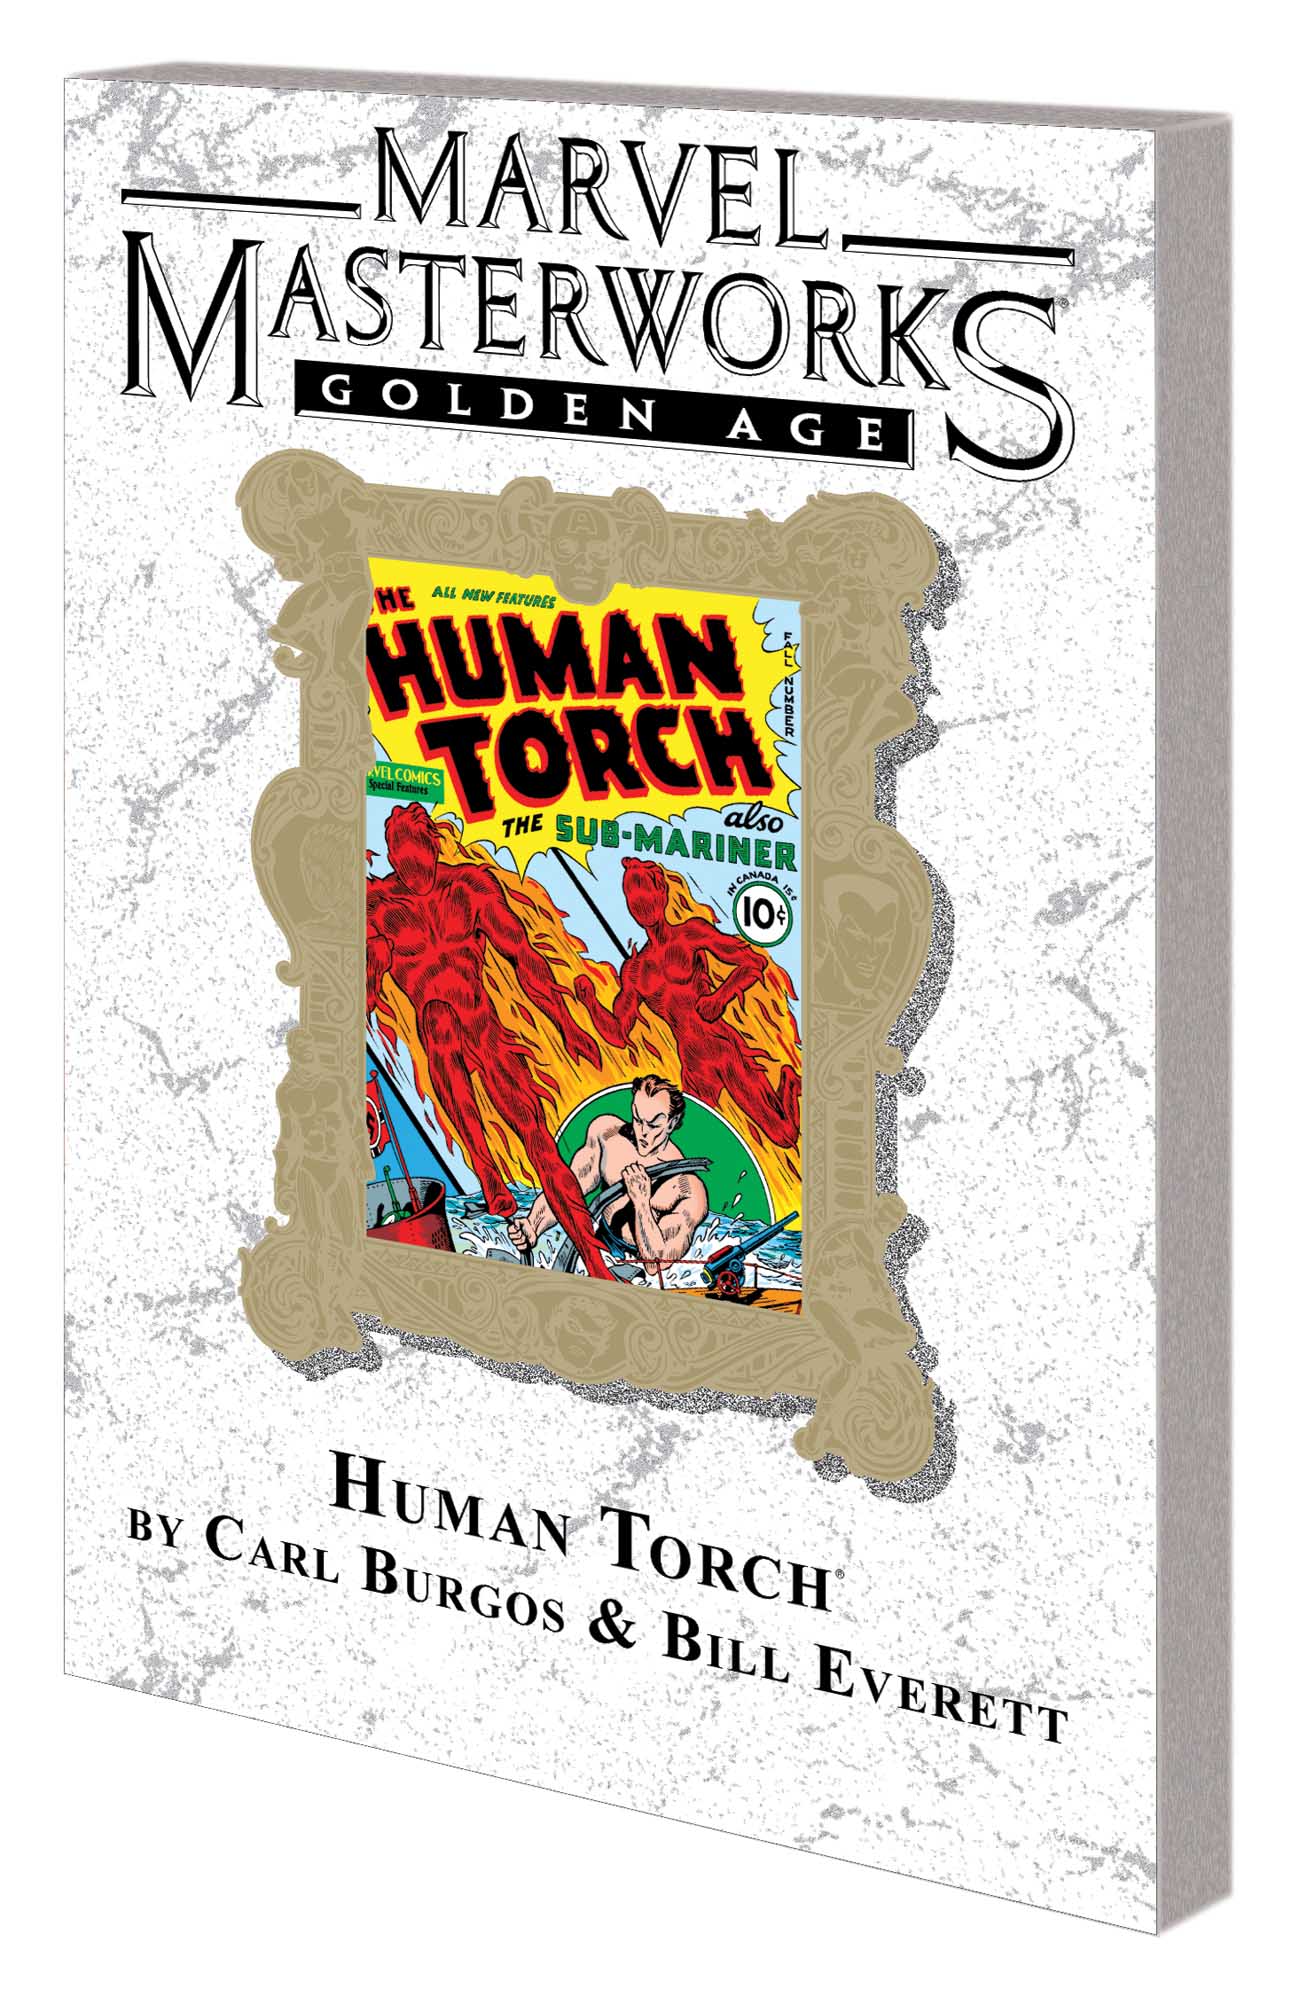 Marvel Masterworks: Golden Age Human Torch (Trade Paperback)